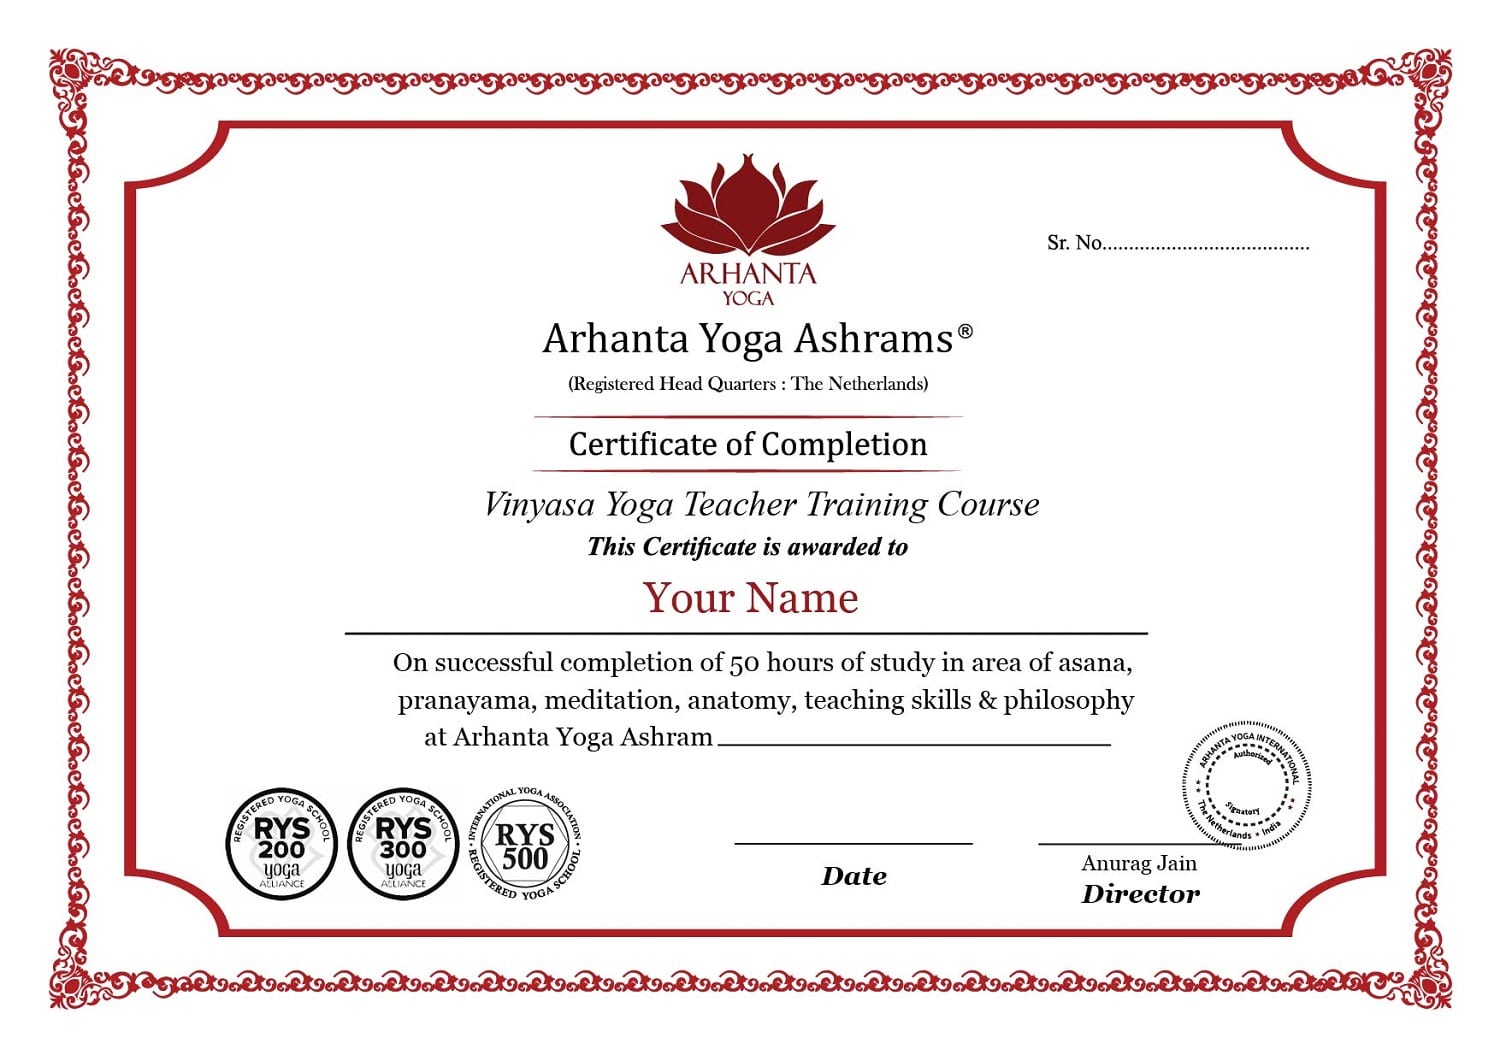 Yoga Alliance Europe Certification